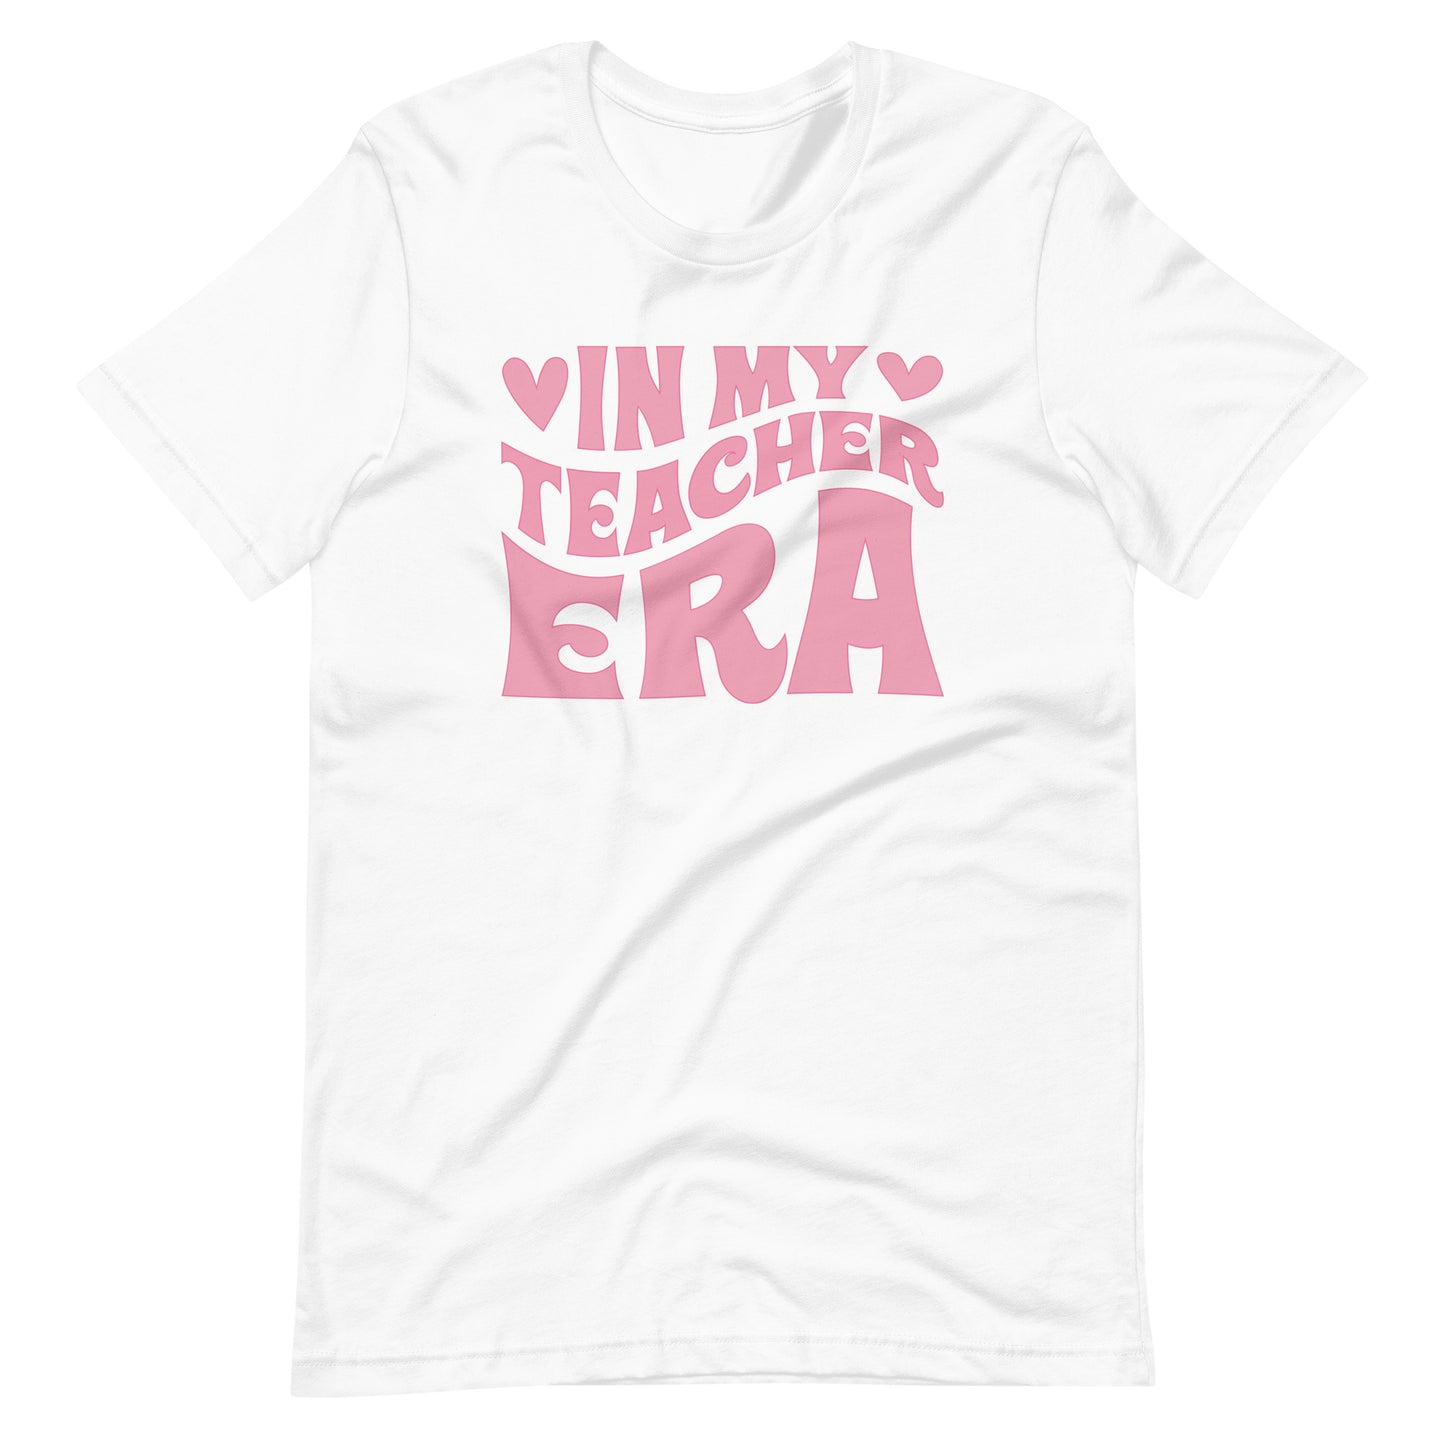 In My Teacher Era - T-Shirt